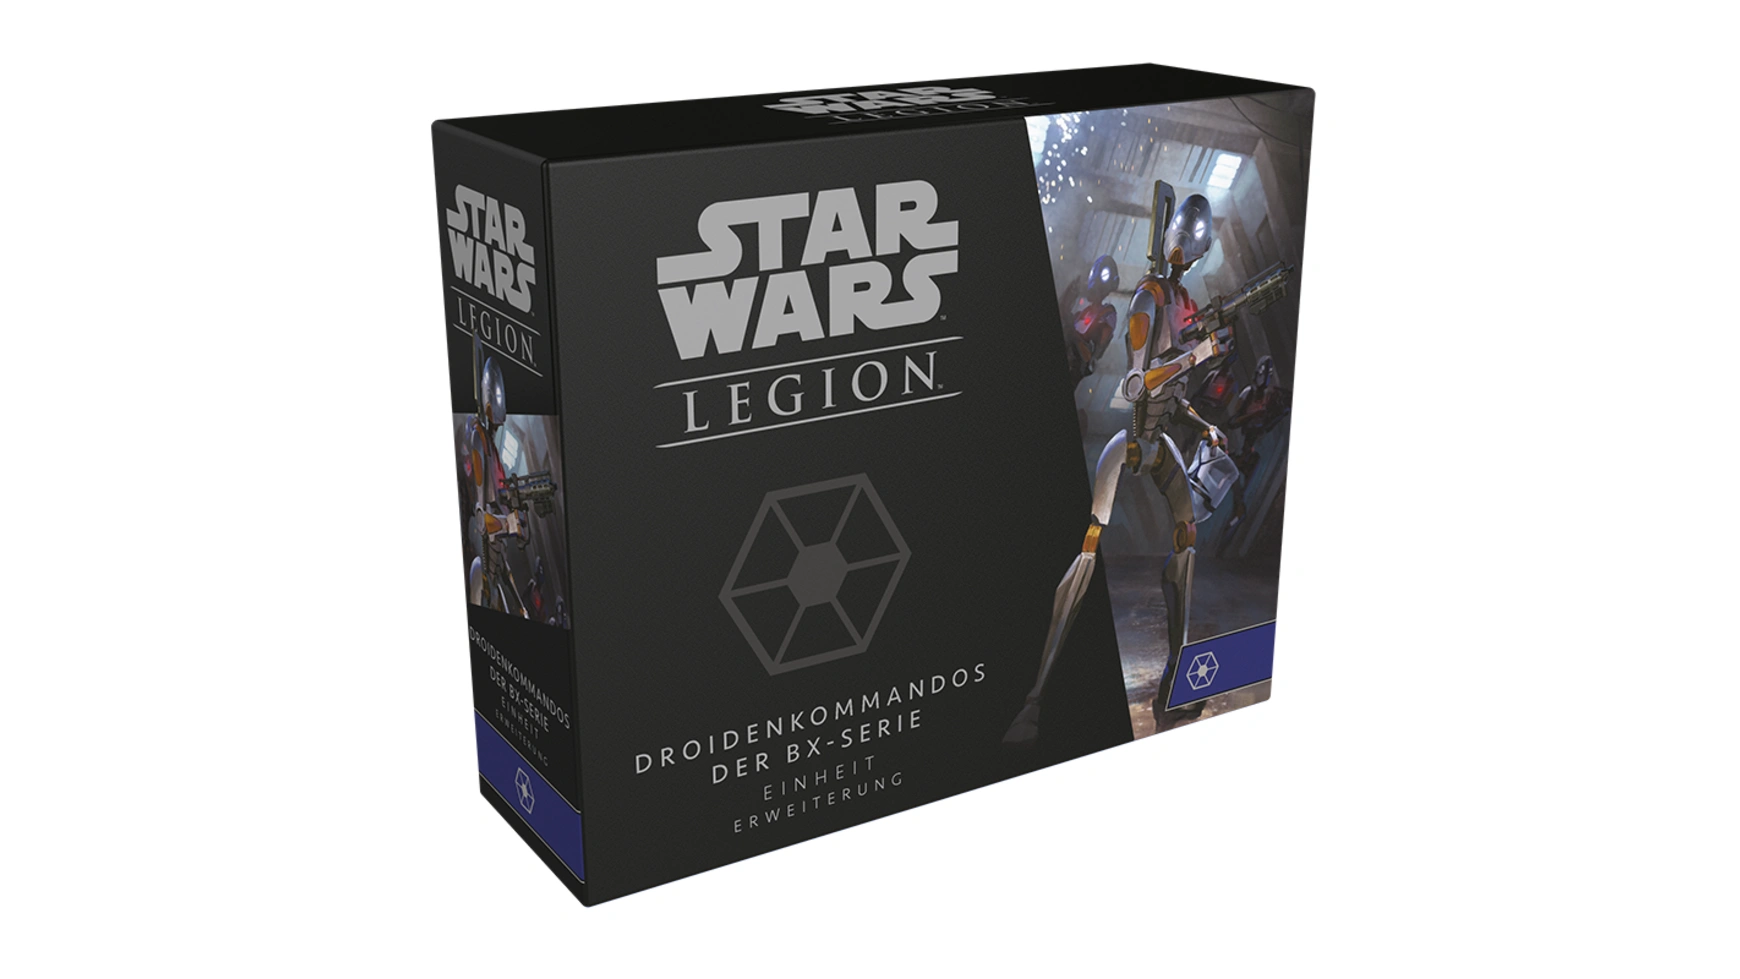 Fantasy Flight Games Star Wars: Legion Дроиды-коммандос серии BX Expansion DE цена и фото